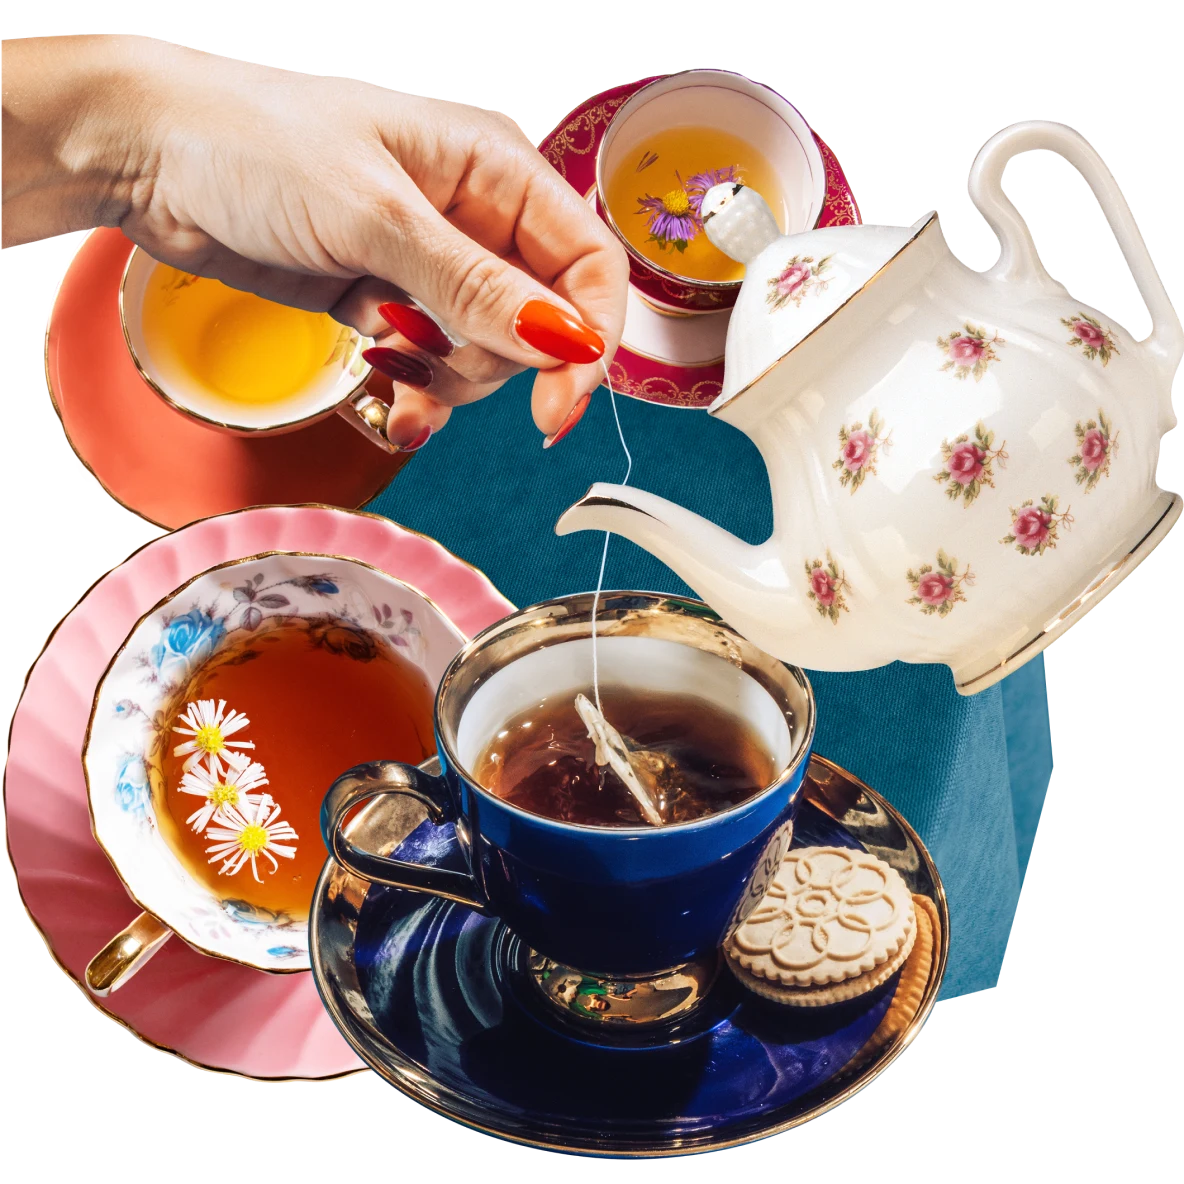 Collage di tazzine da tè piene di tè di diverse tonalità, più o meno chiare. Teiera bianca con rose inclinata per versare il tè. Una mano bianca mette in infusione una bustina di tè in una tazza blu.